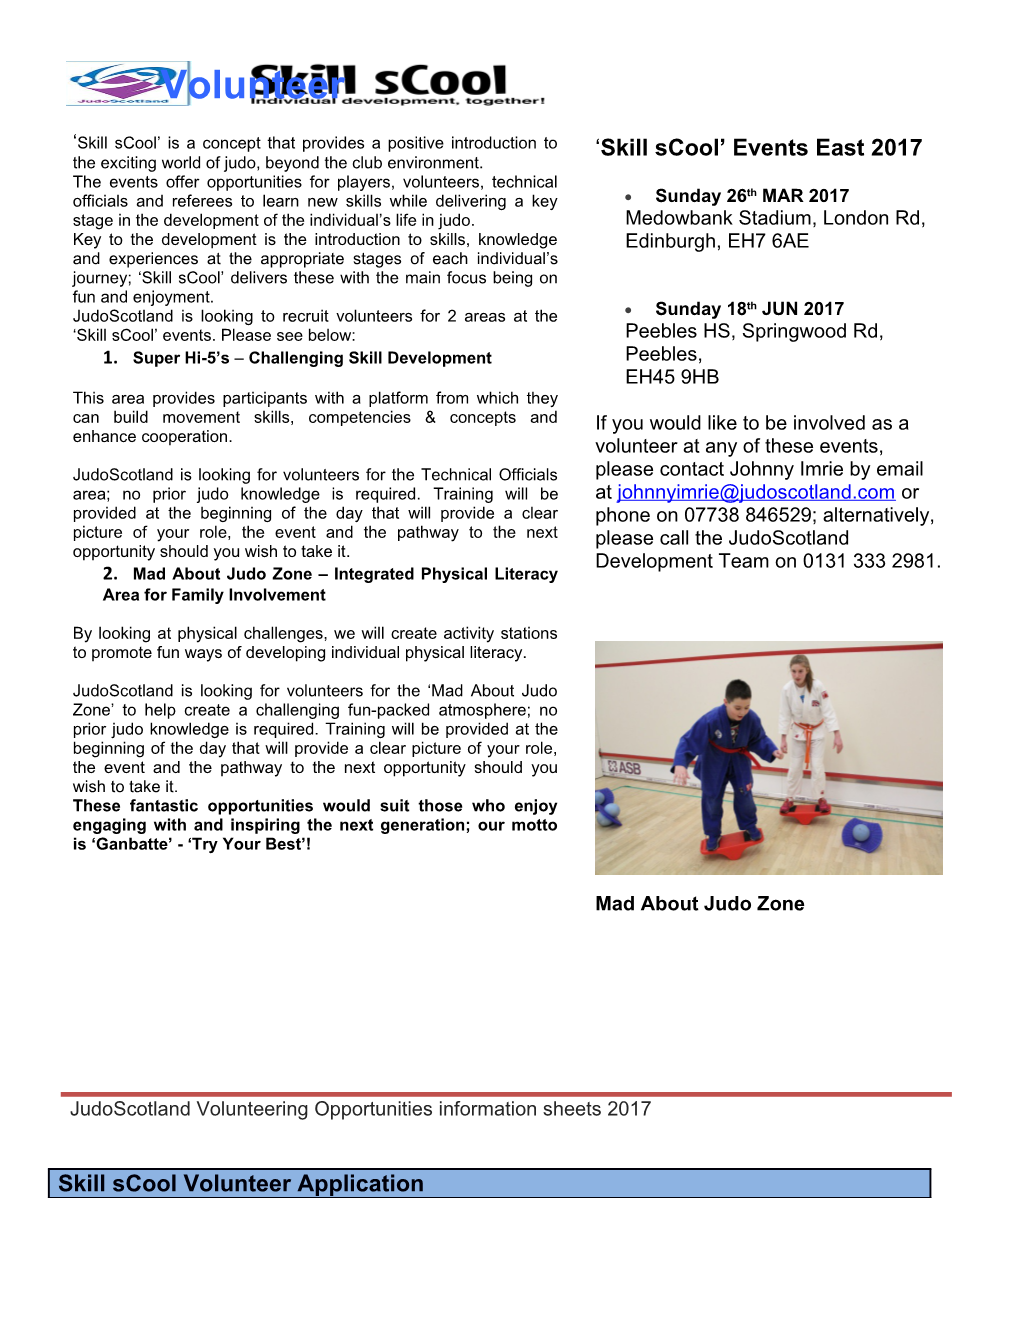 Judoscotland Volunteering Opportunities Information Sheets 2017